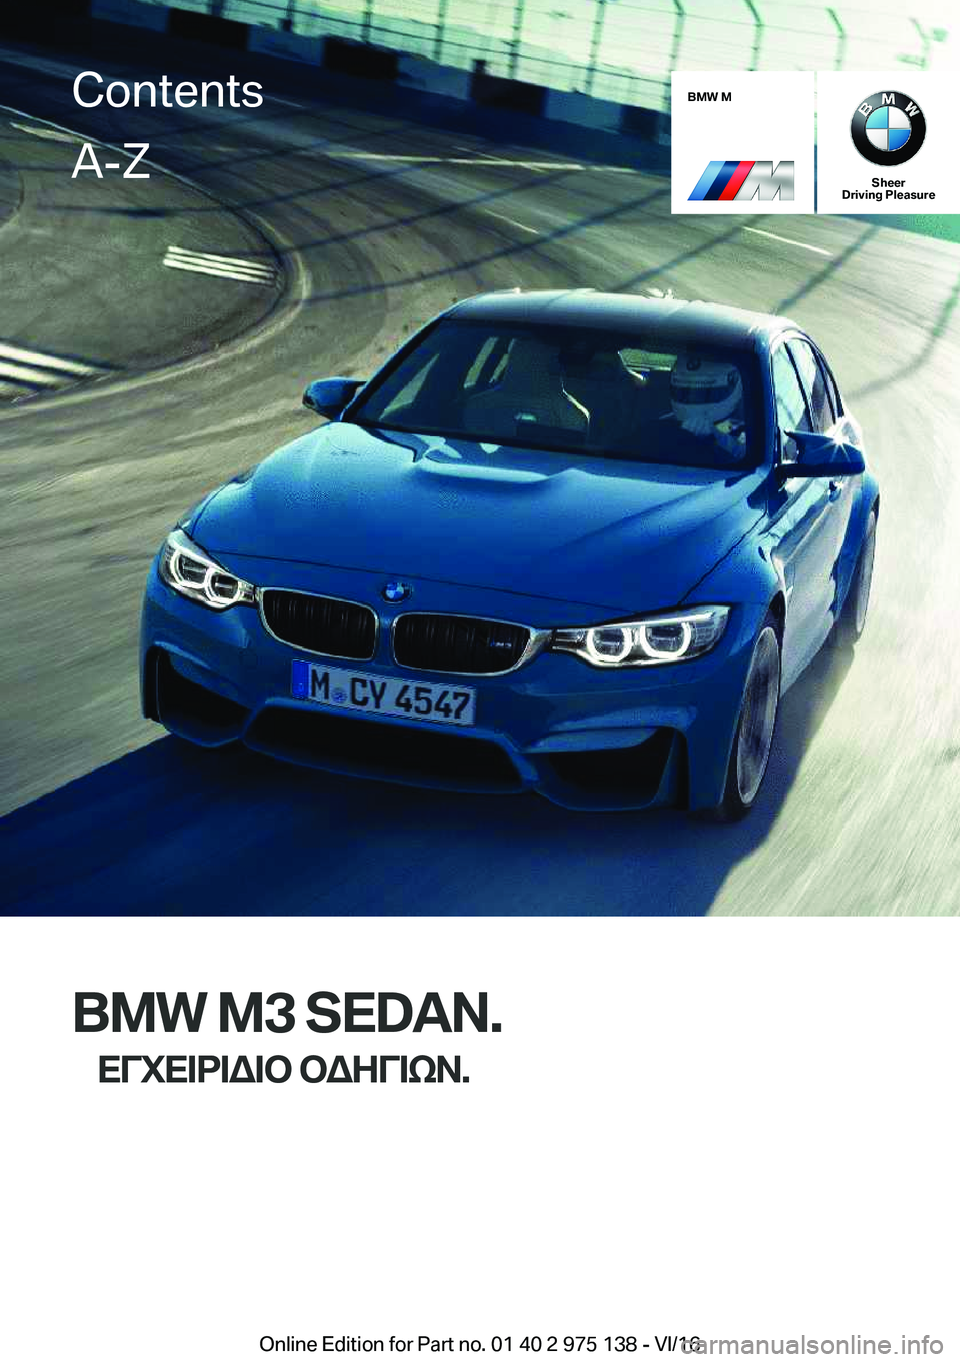 BMW M3 2017  ΟΔΗΓΌΣ ΧΡΉΣΗΣ (in Greek) �B�M�W��M
�S�h�e�e�r
�D�r�i�v�i�n�g��P�l�e�a�s�u�r�e
�B�M�W��M�3��S�E�D�A�N�.
XViX=d=W=b�bW;V=kA�.
�C�o�n�t�e�n�t�s�A�-�Z
�O�n�l�i�n�e� �E�d�i�t�i�o�n� �f�o�r� �P�a�r�t� �n�o�.� 